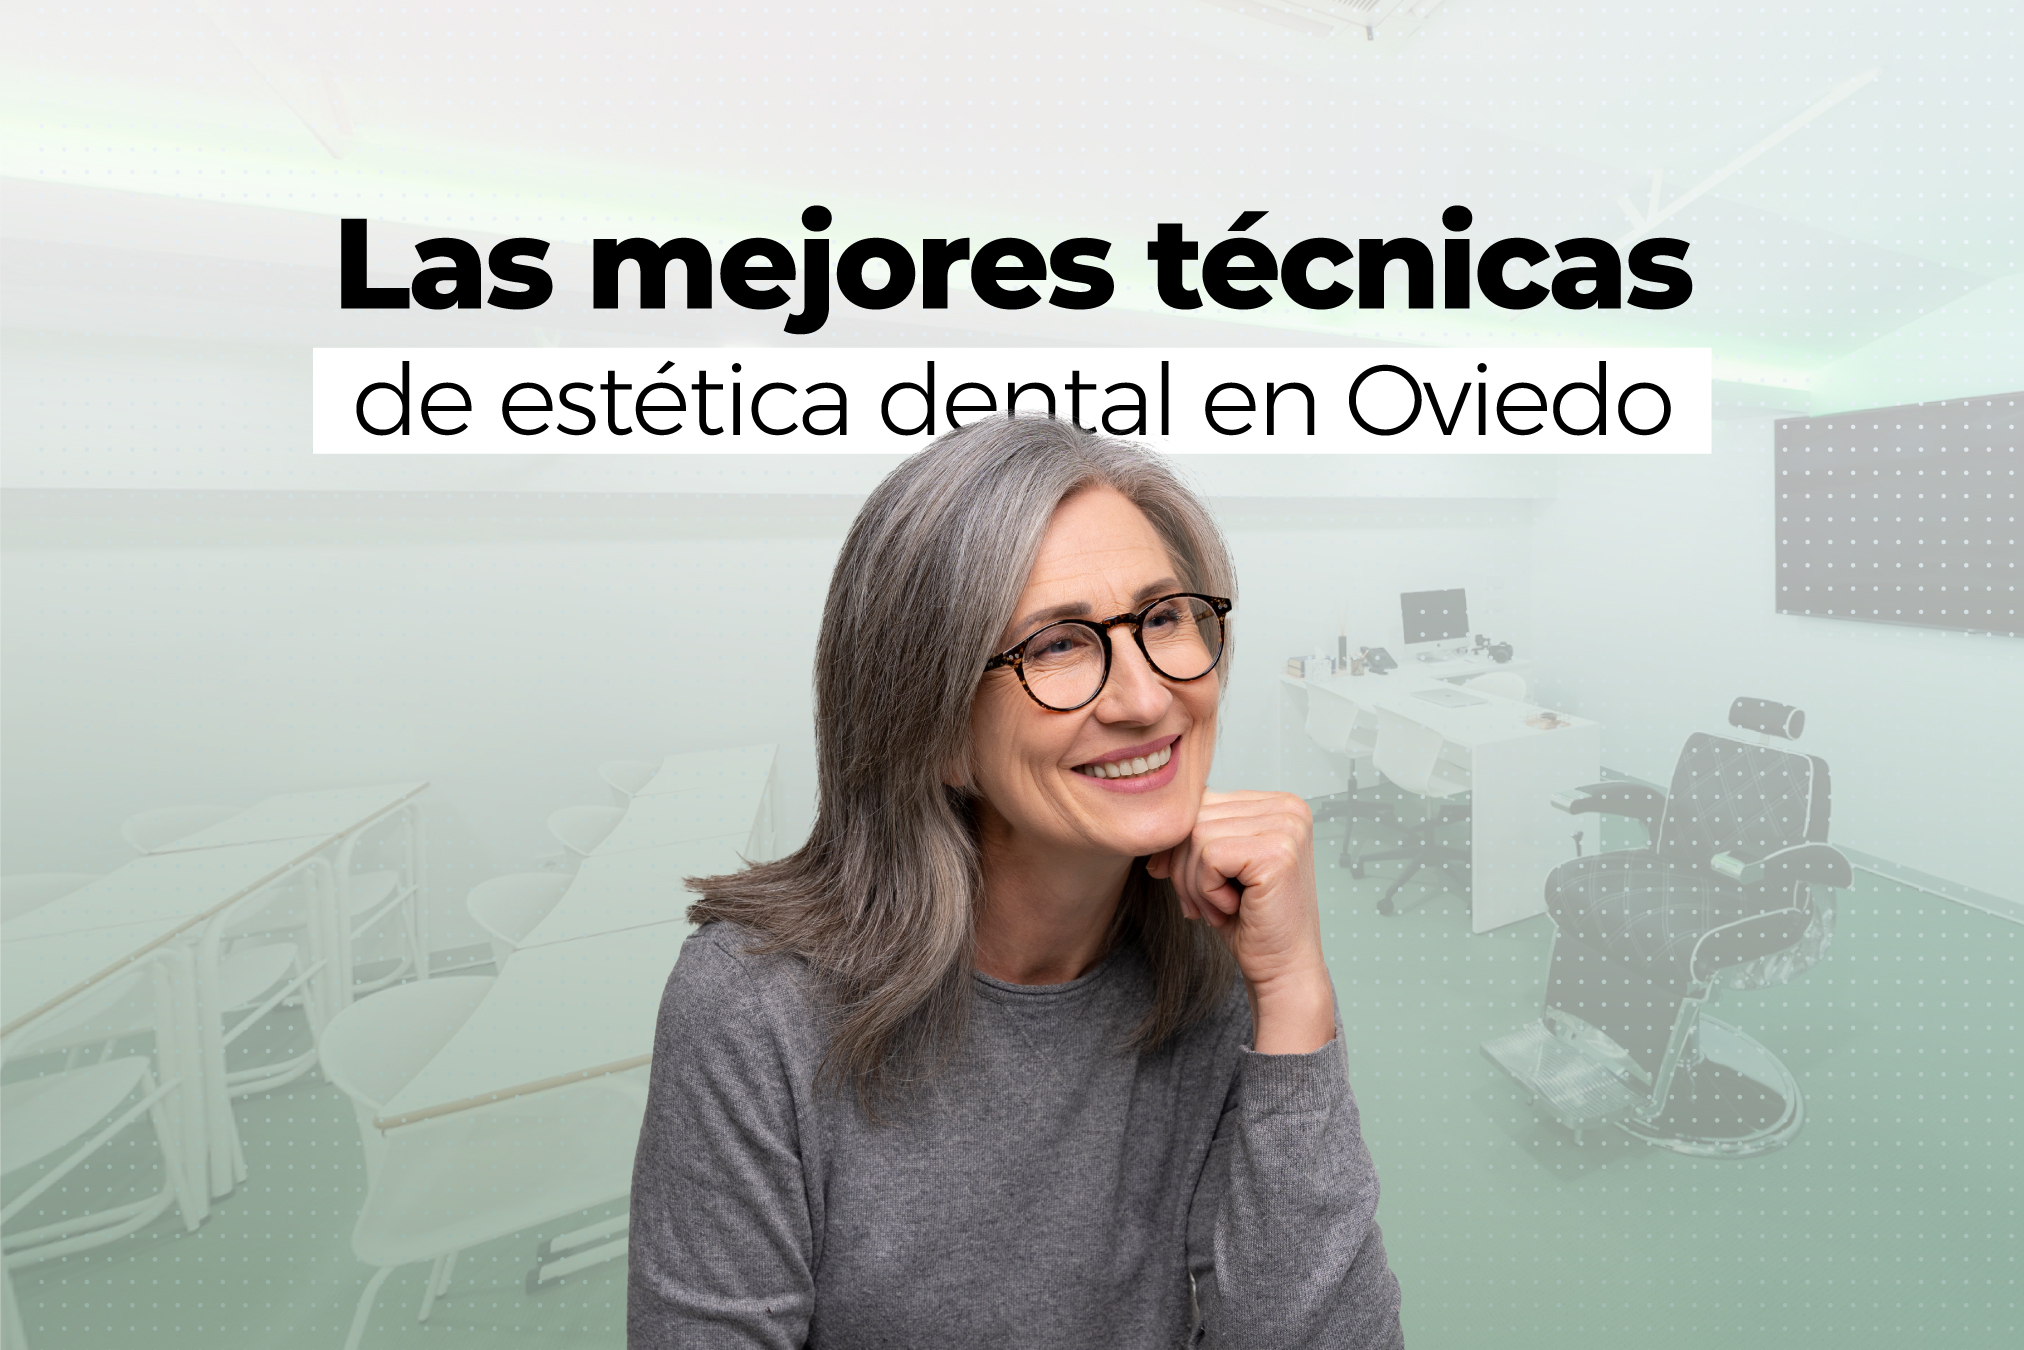 Las mejores técnicas de estética dental en Oviedo